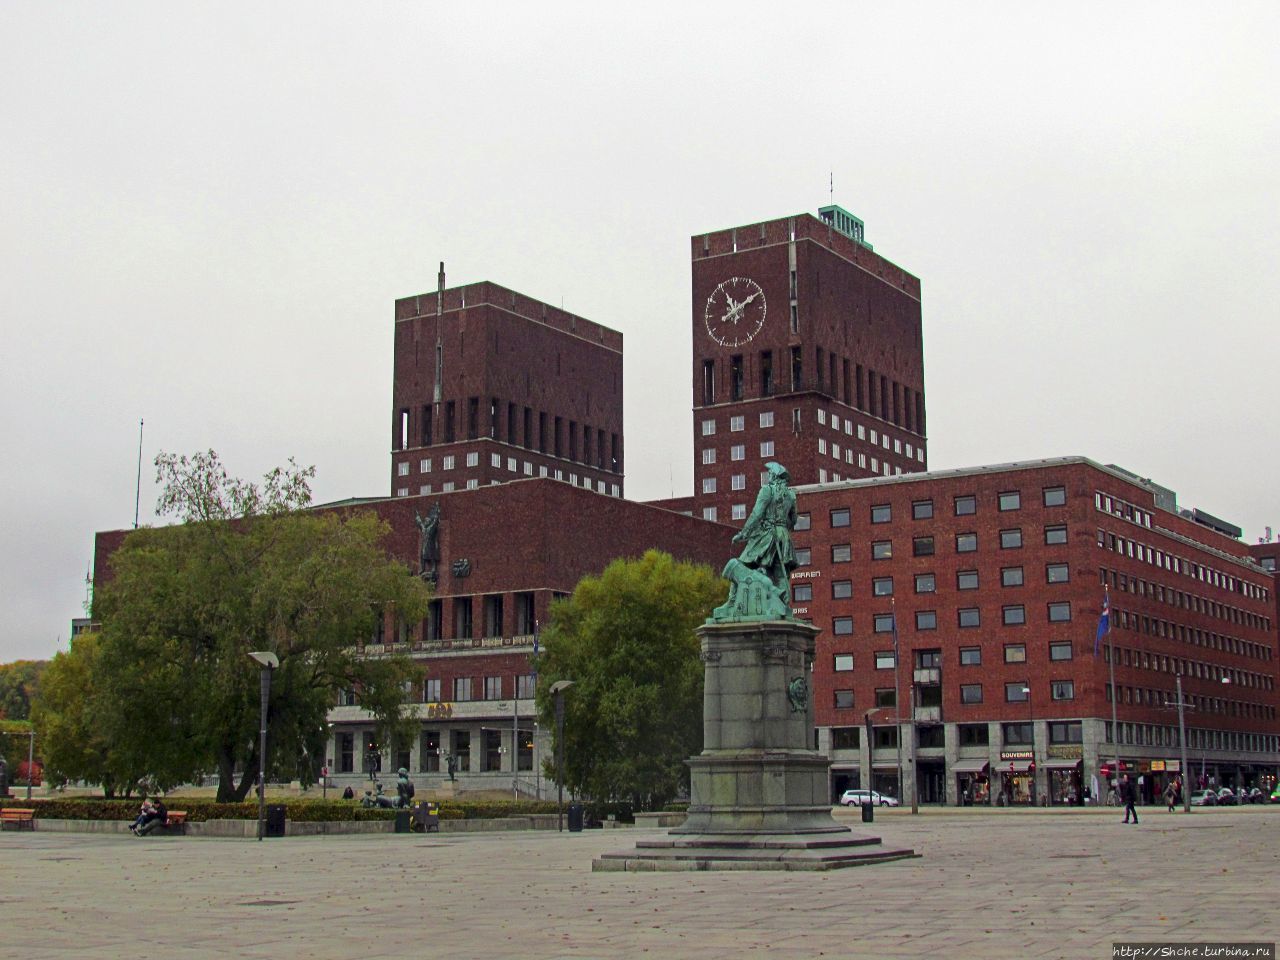 Ратушная площадь / Rådhusplassen